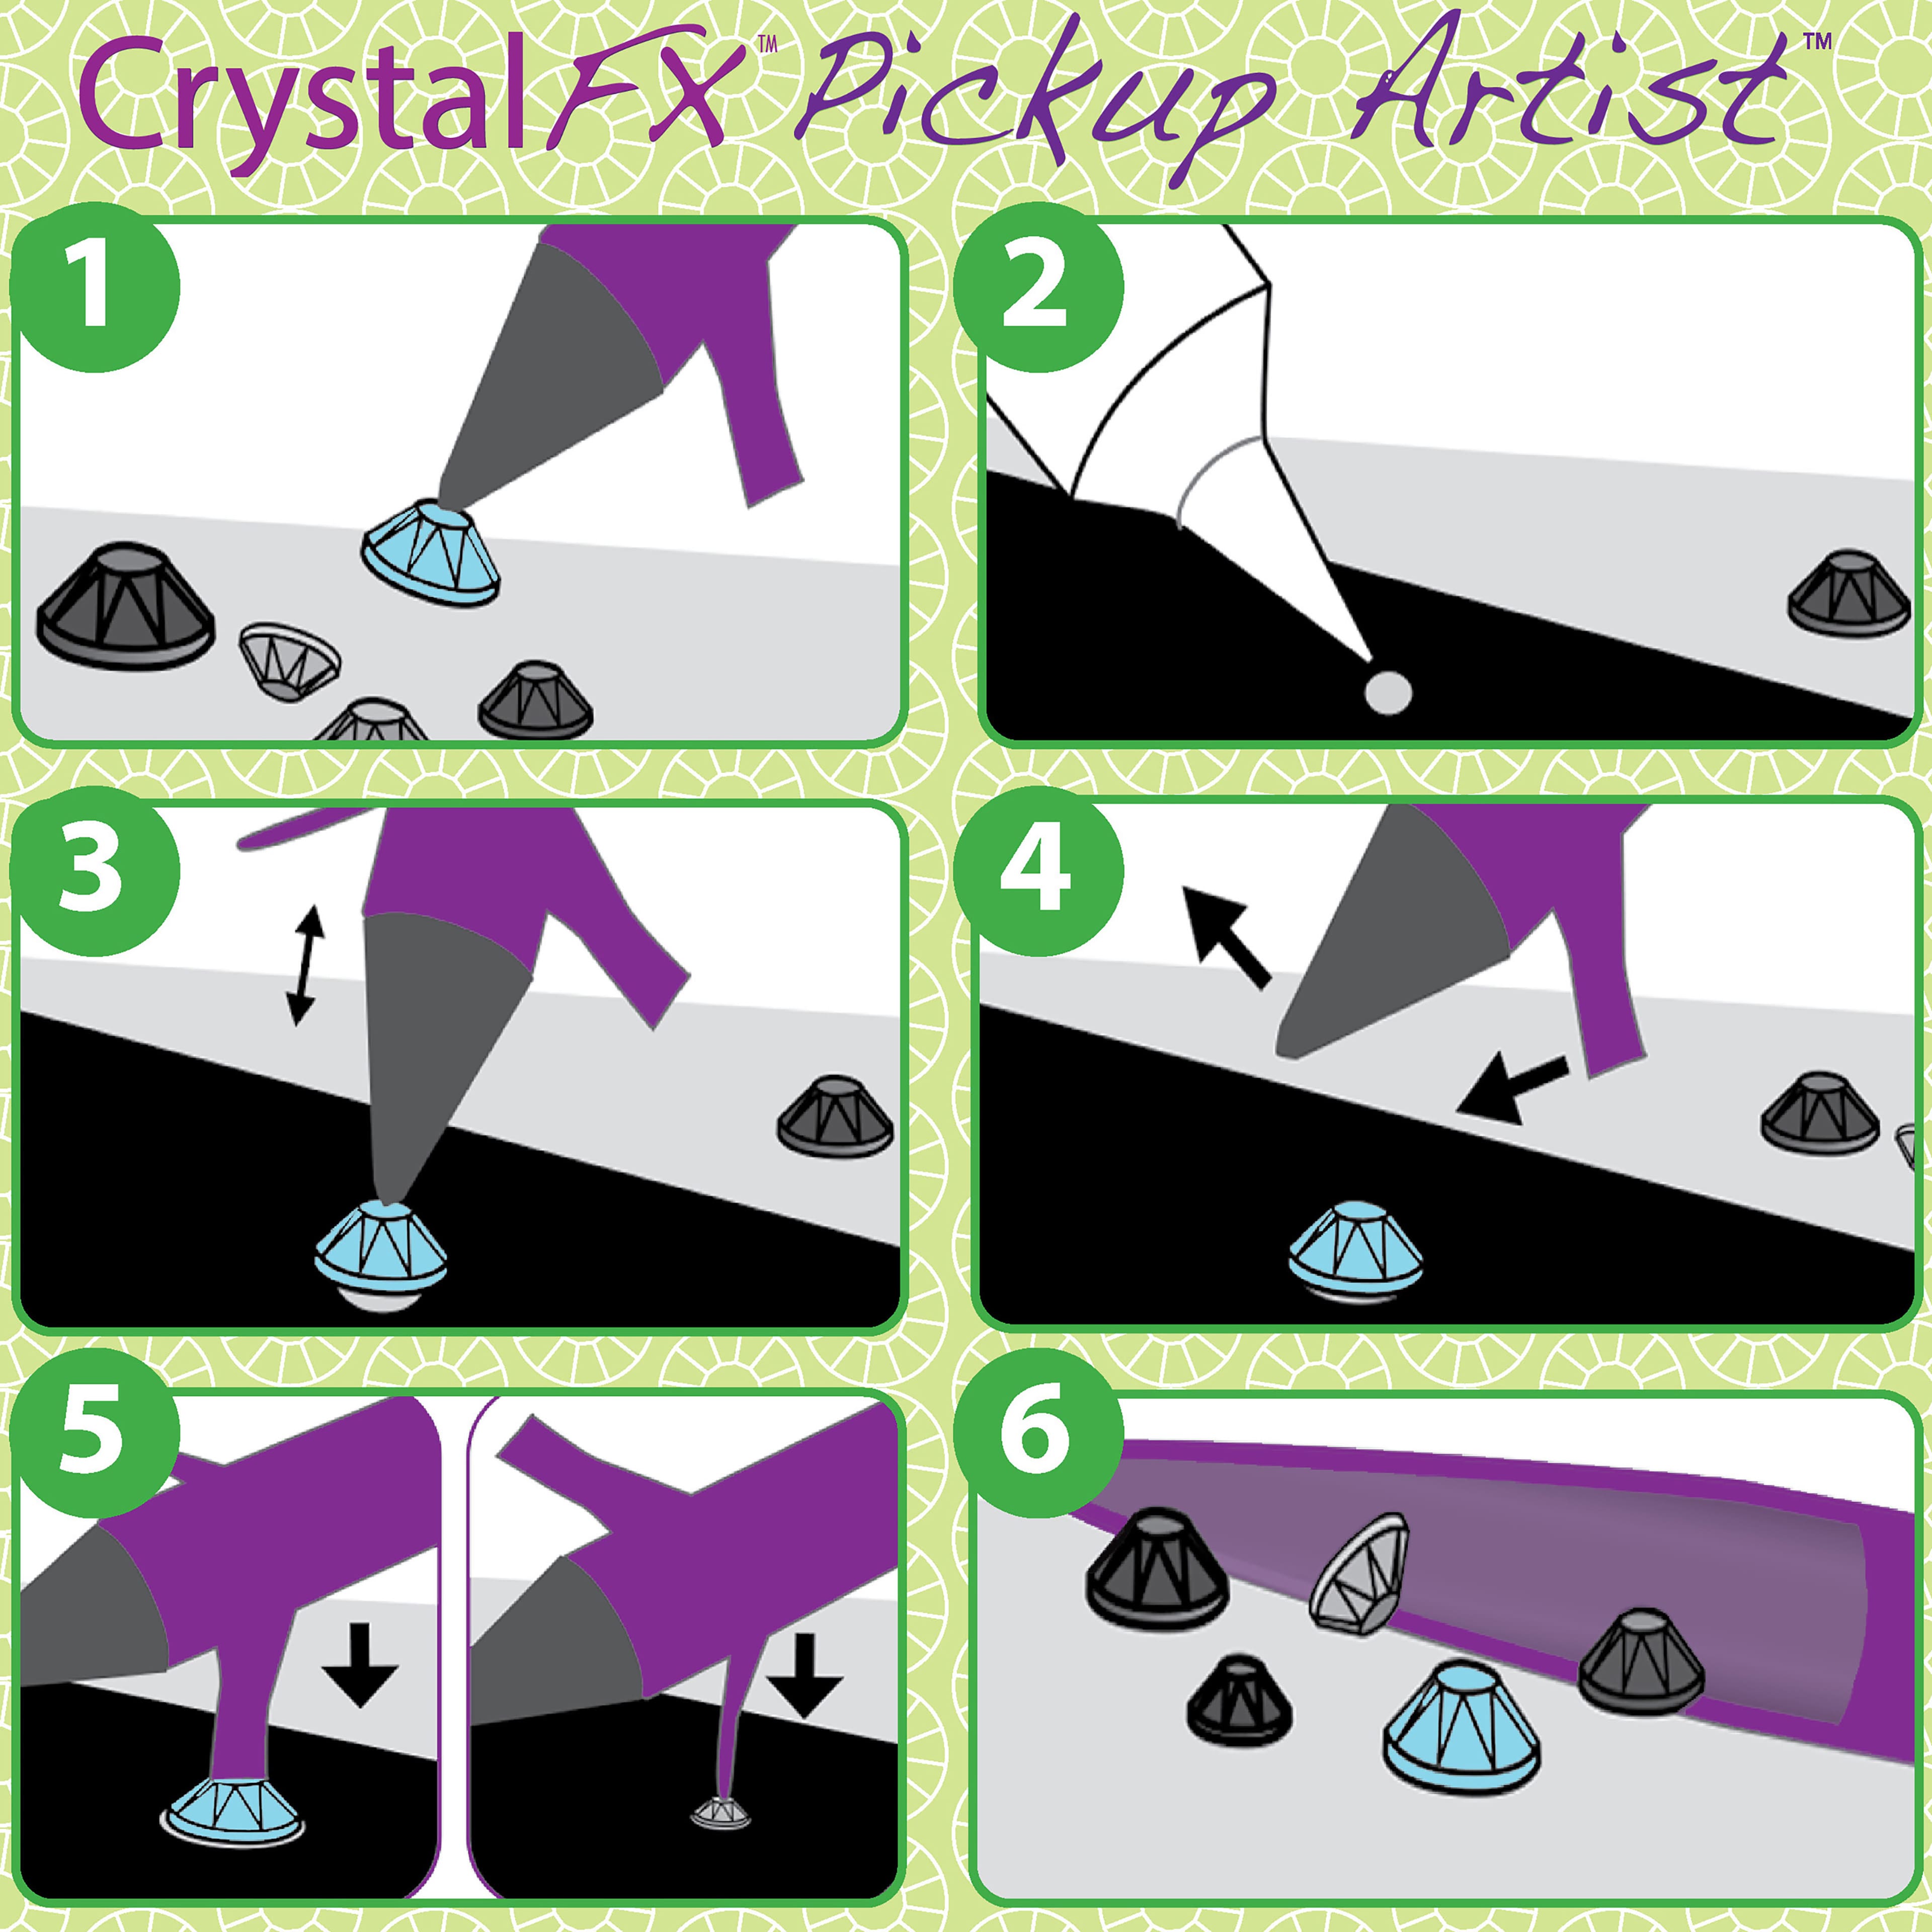 The Beadsmith&#xAE; Crystal FX&#x2122; Pickup Artist